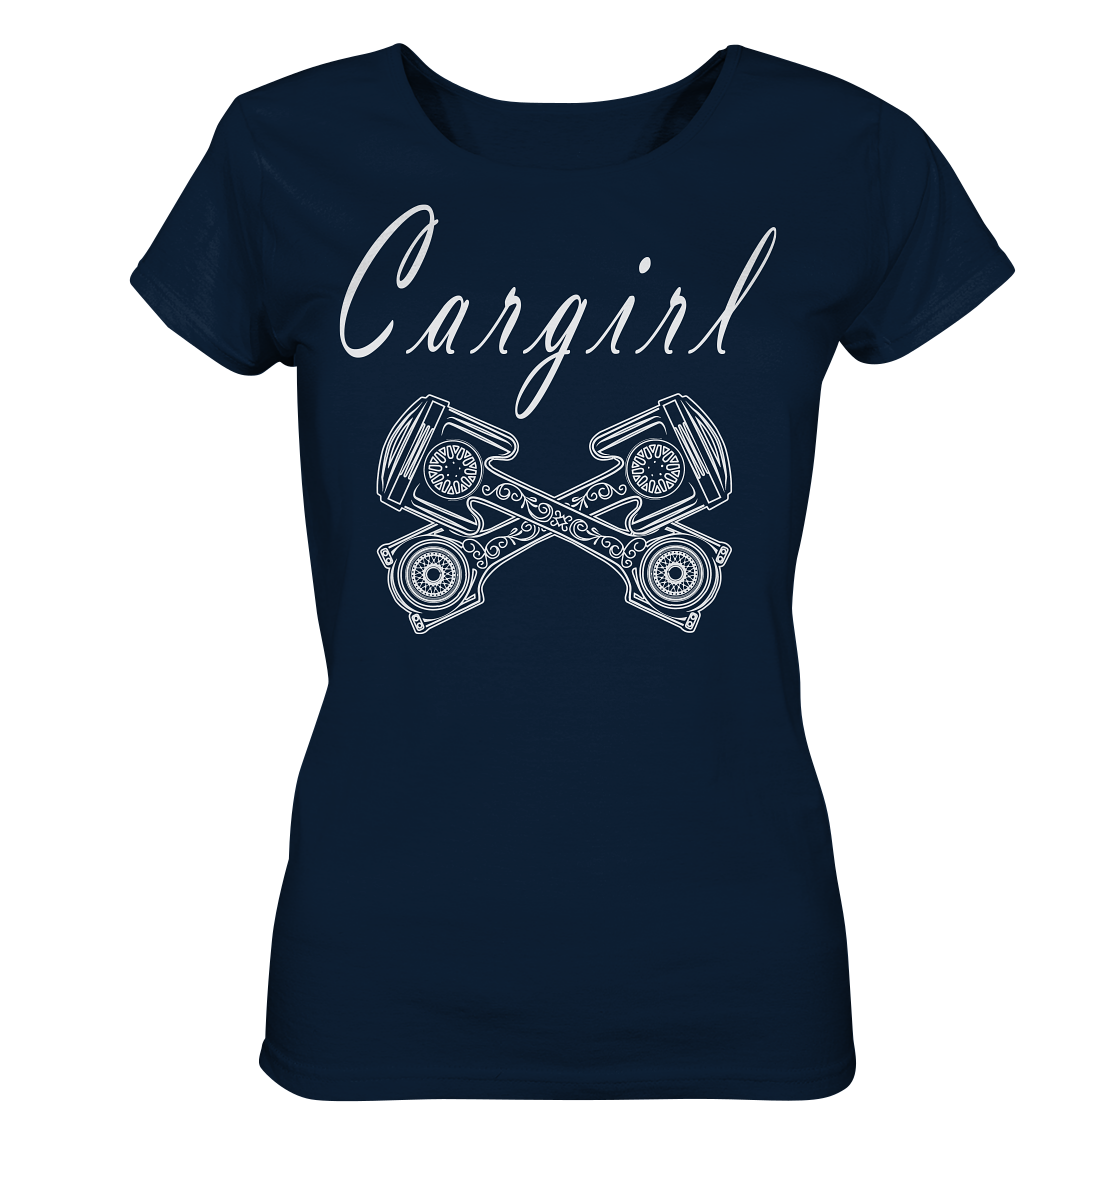 Cargirl_Sugarskull Ladies Organic Shirt